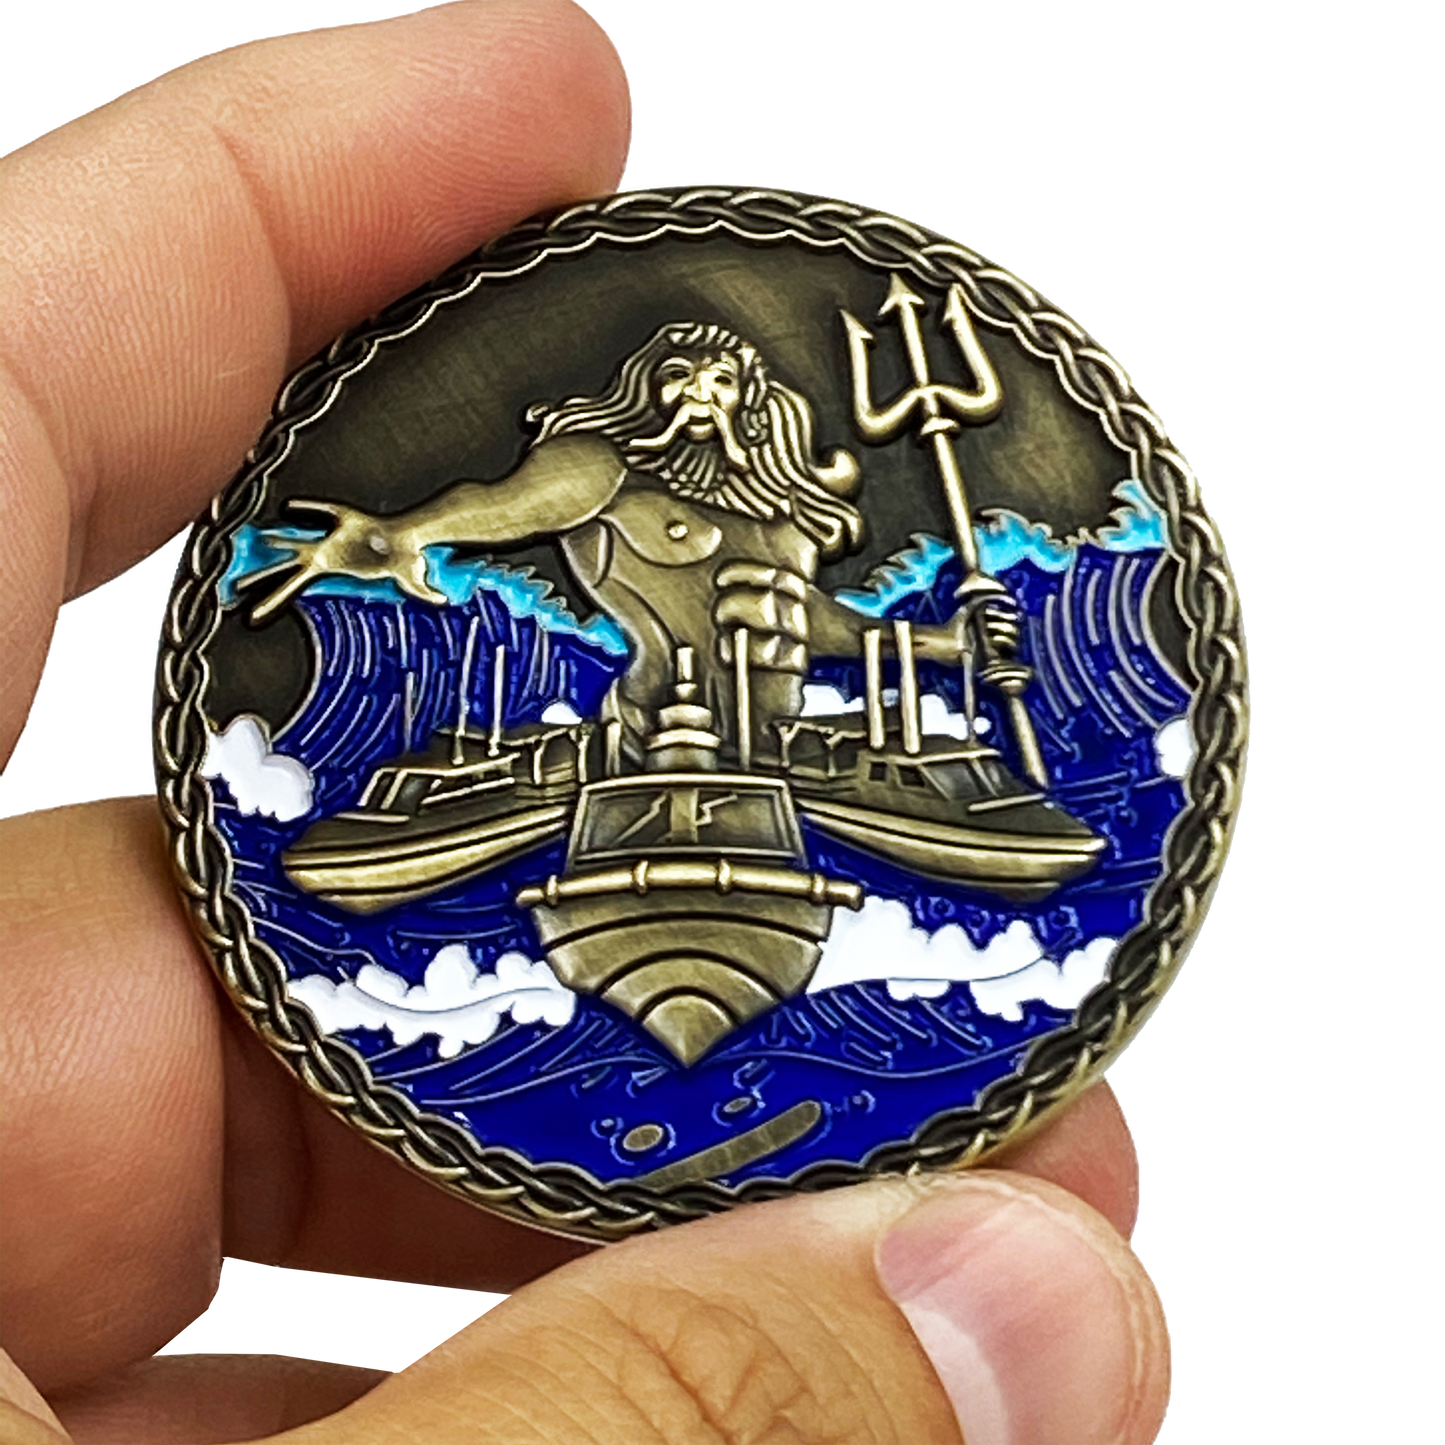 AA-020 King Neptune Marine Patrol Thin Blue Line Police CBP Air and Marine Coast Guard Challenge Coin